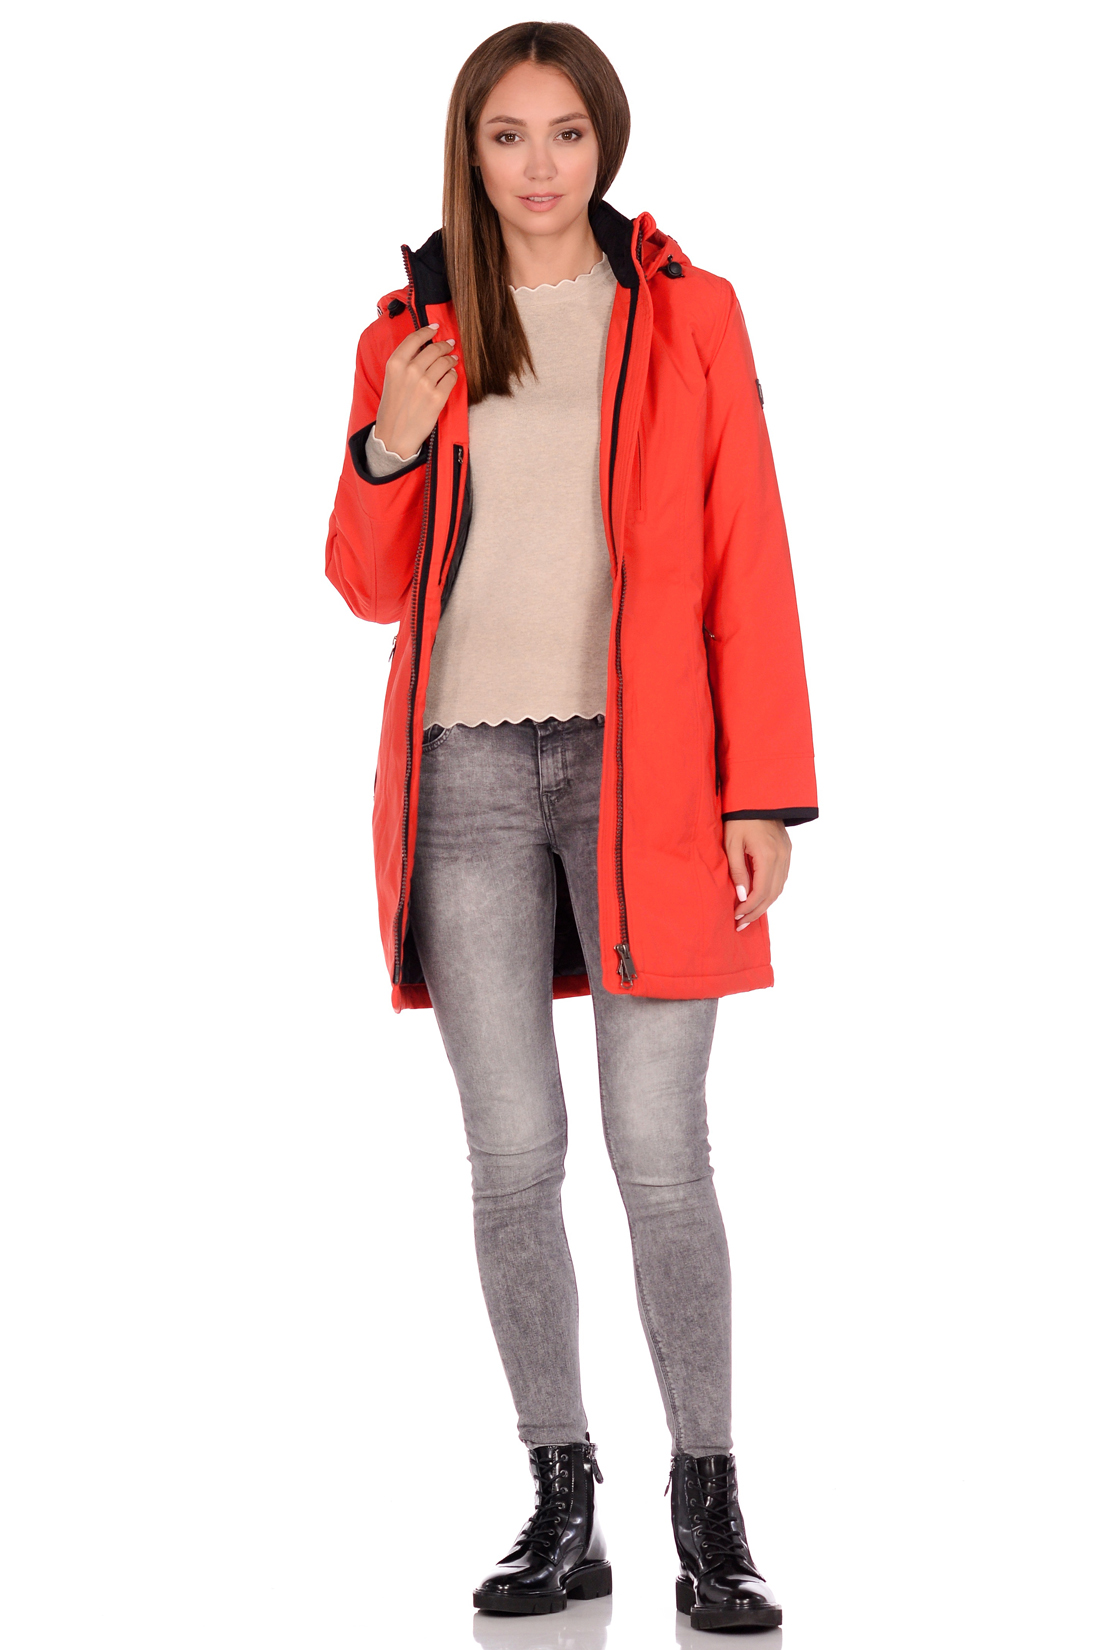 Куртка со стёганой подкладкой (арт. baon B038532), размер XXL, цвет красный Куртка со стёганой подкладкой (арт. baon B038532) - фото 4